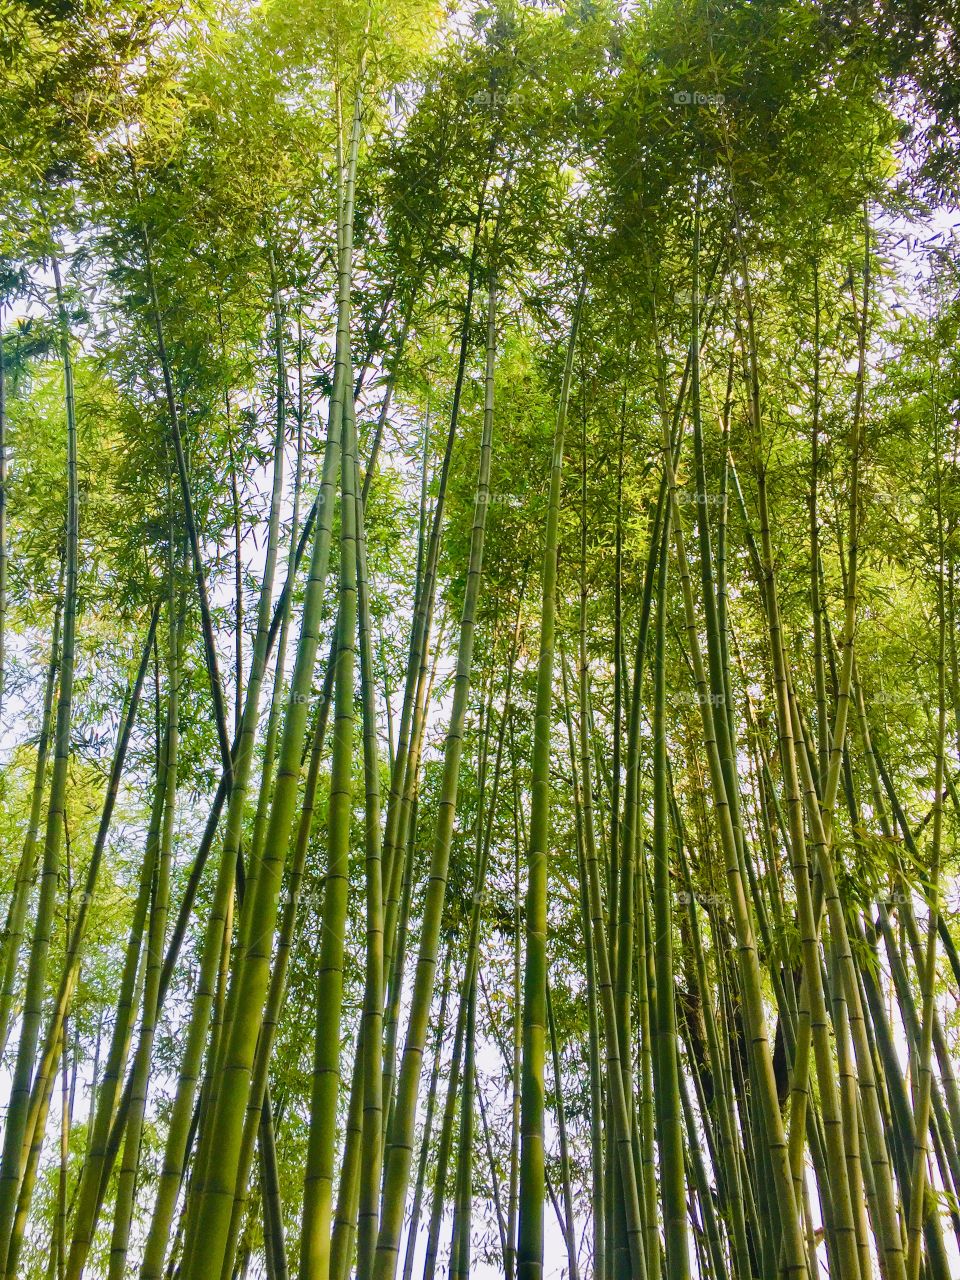 Bamboo Groves 